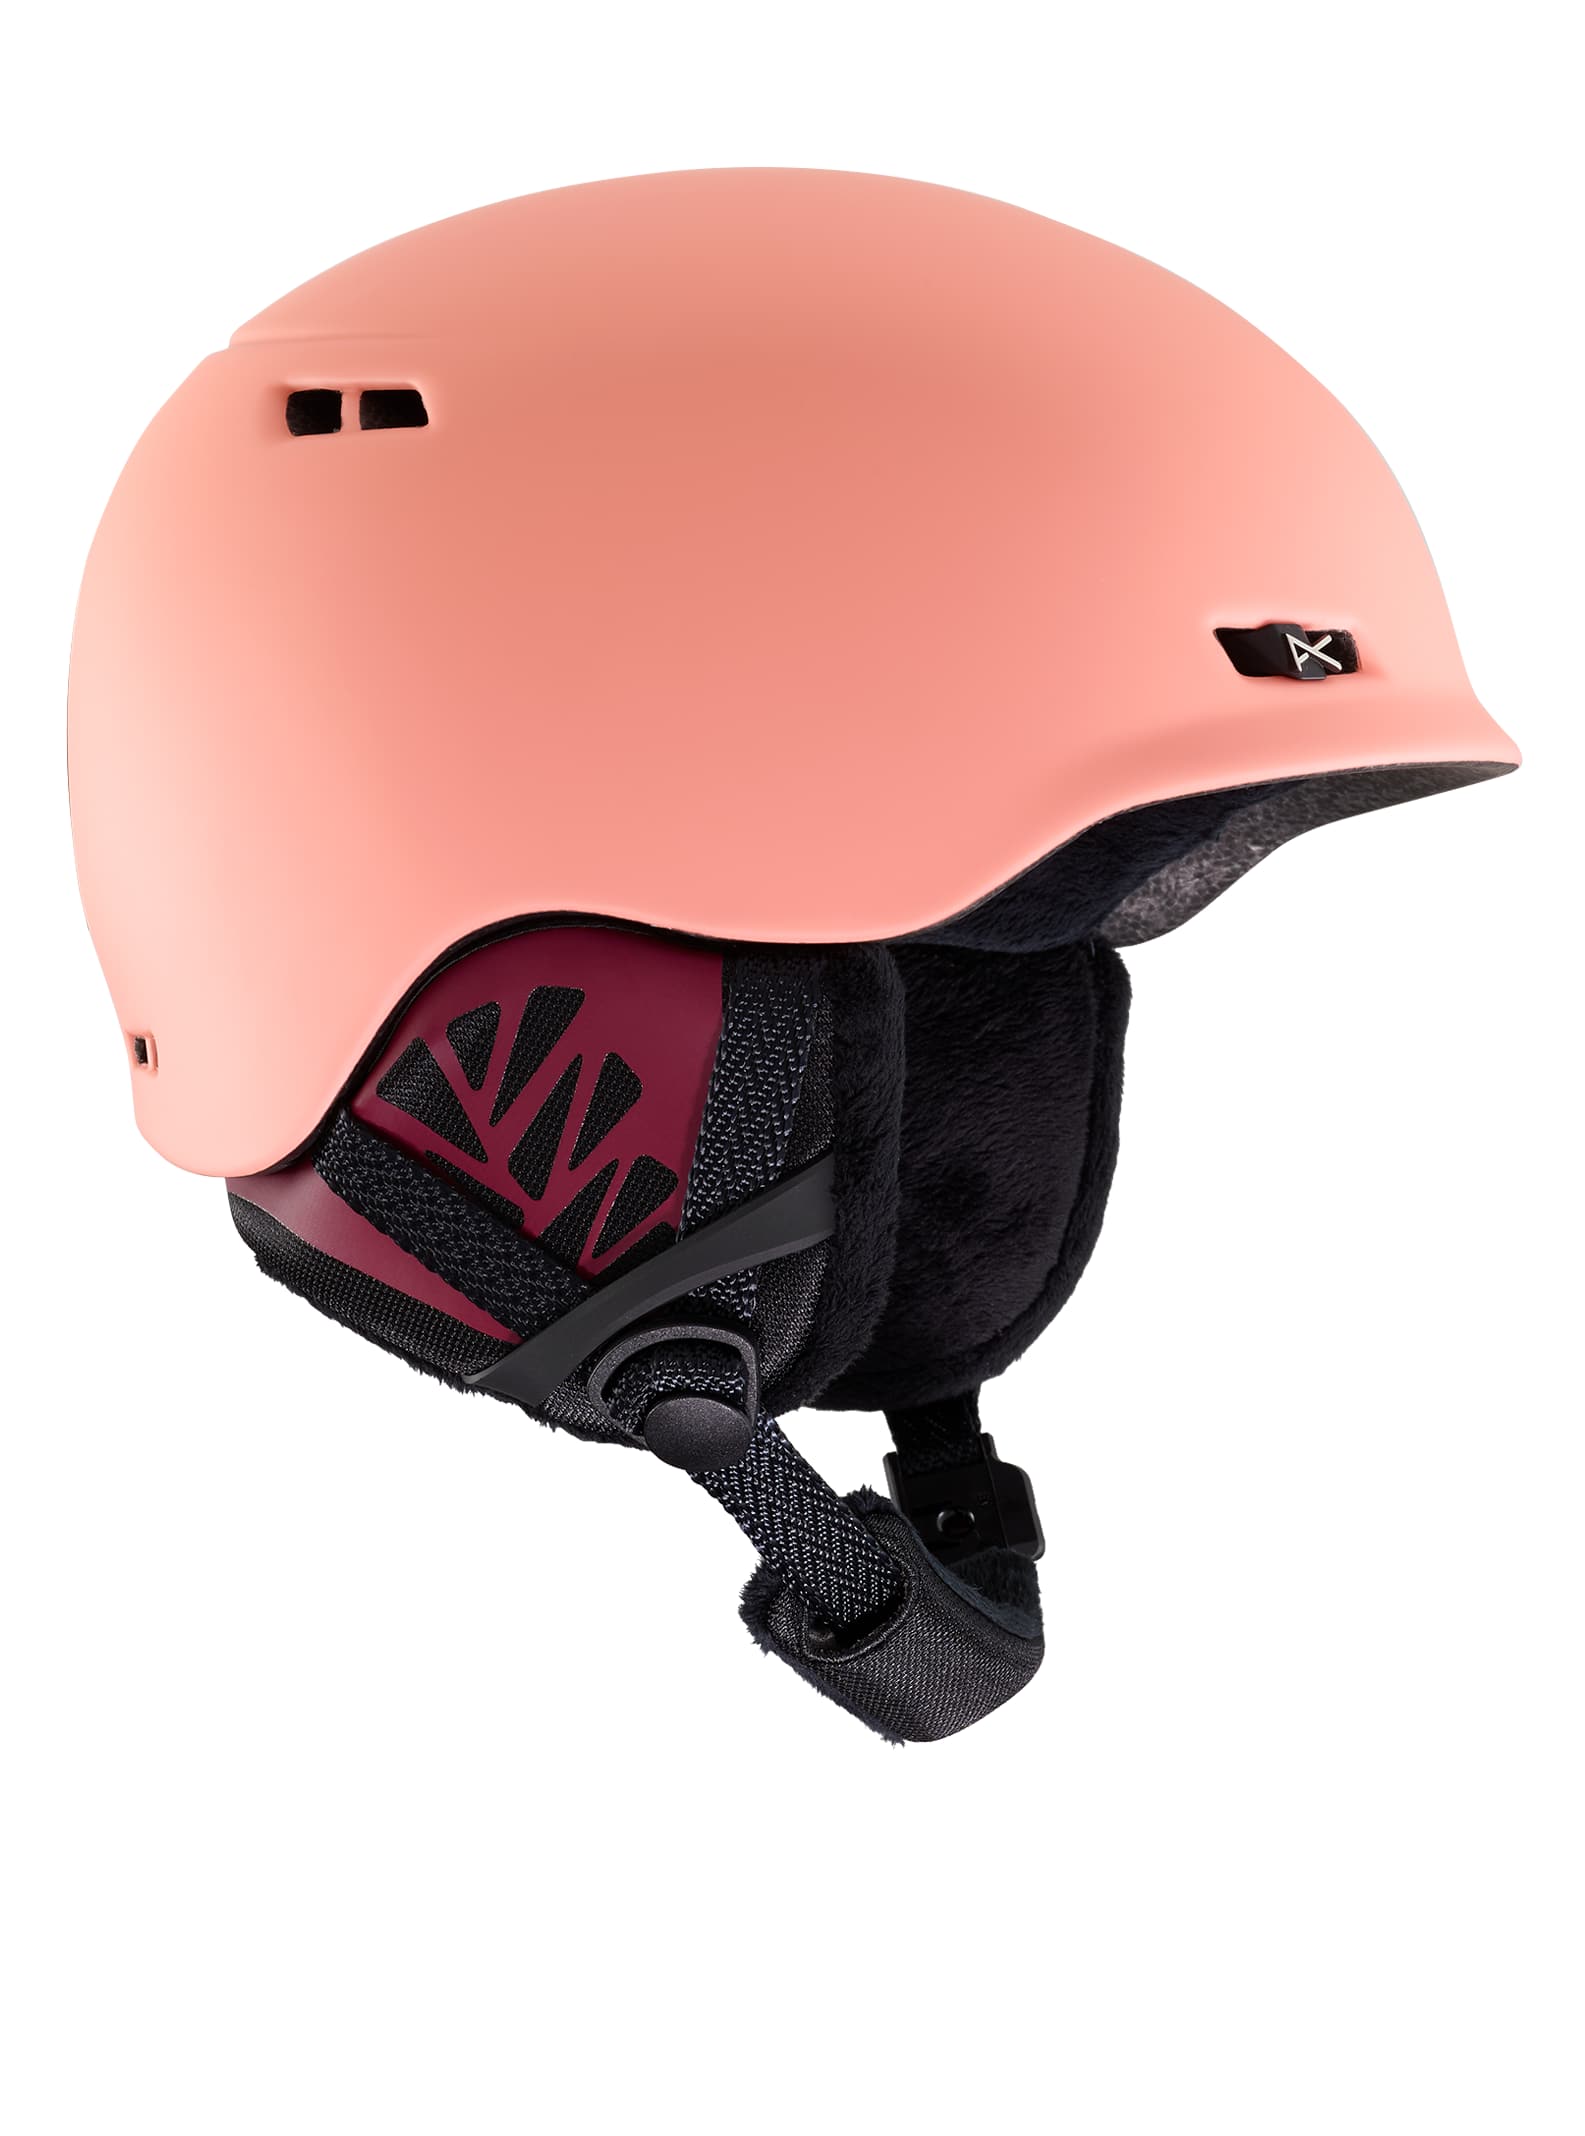 Women's Anon Griffon Helmet | Burton.com Winter 2020 US